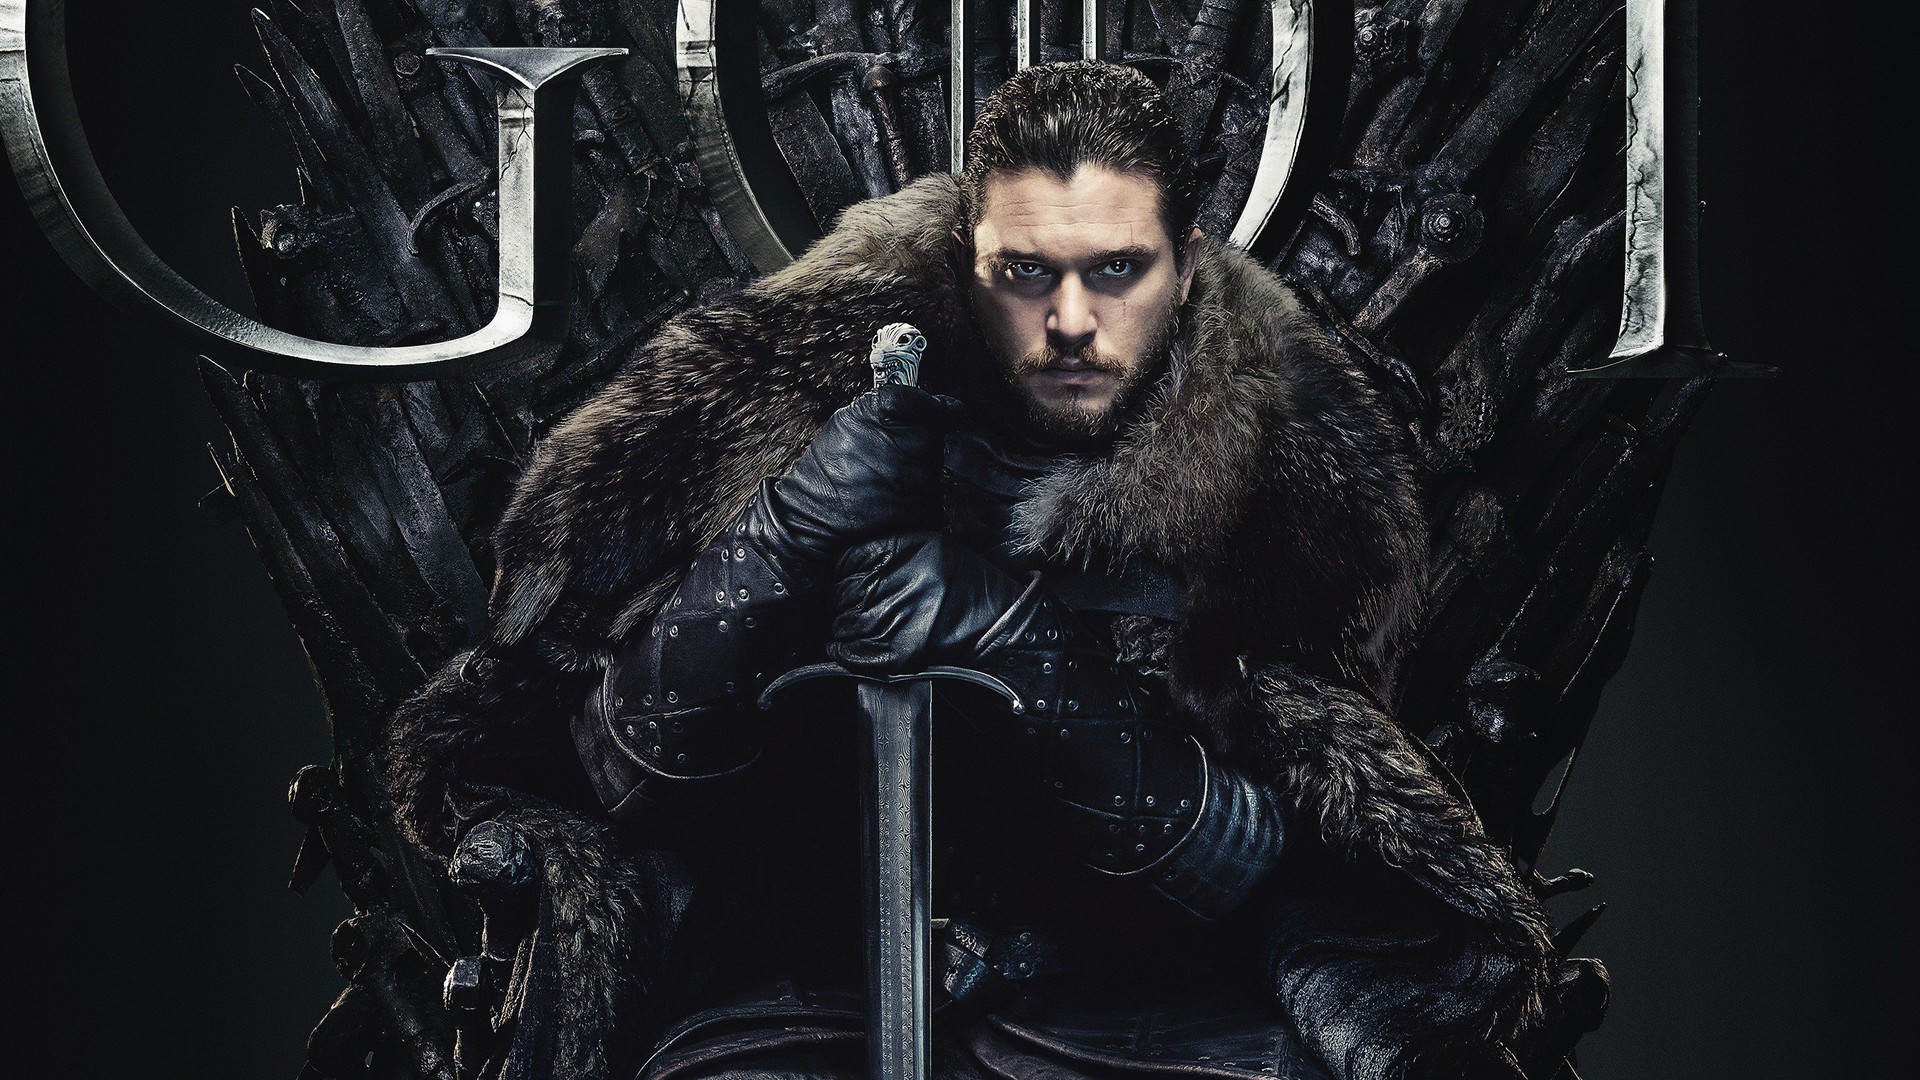 Game of Thrones 8 Season Wallpaper For Desktop 2019 Movie Poster